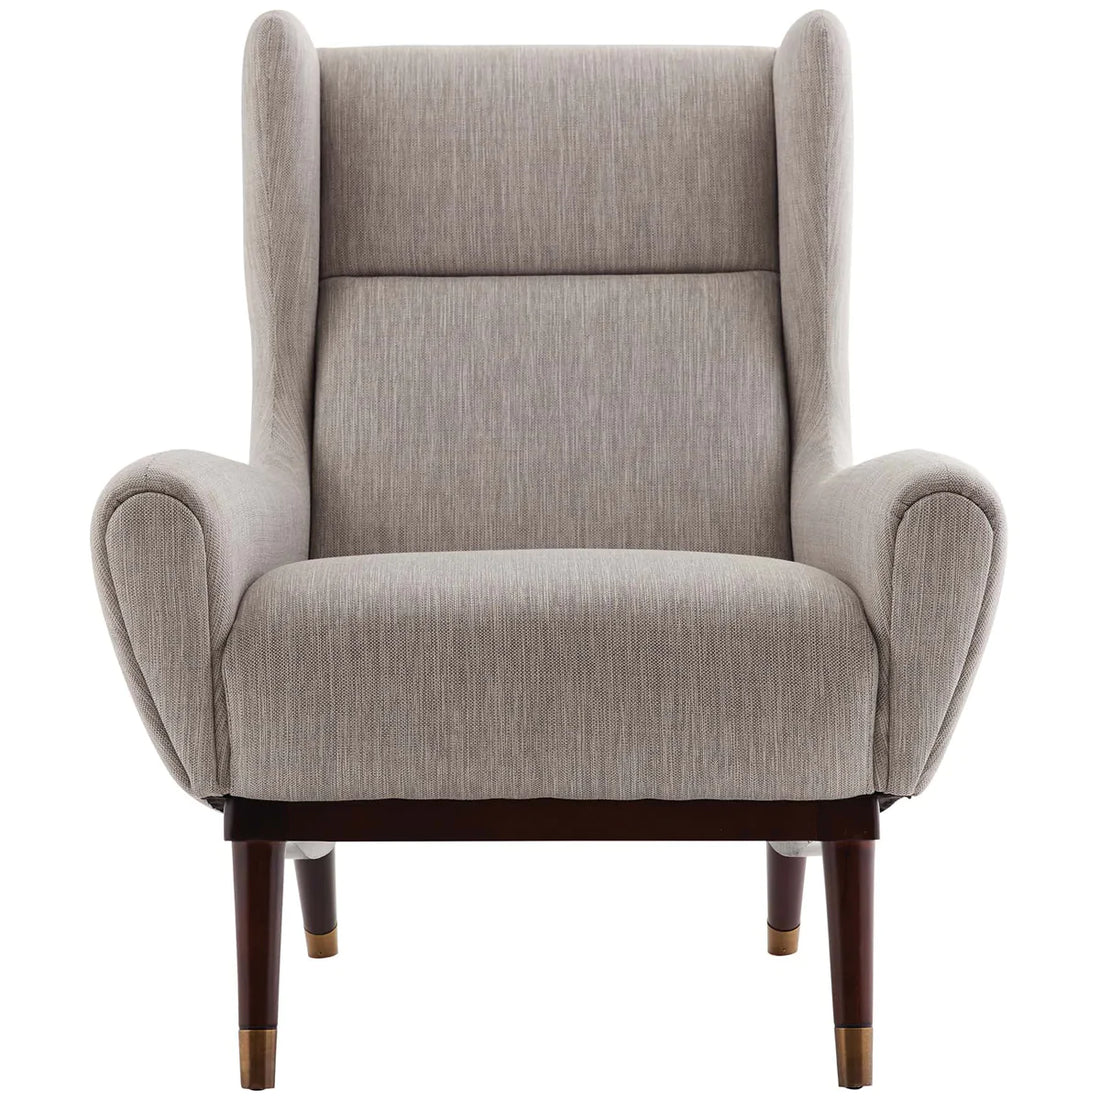 Strata Furniture Chair Accessory & Reviews